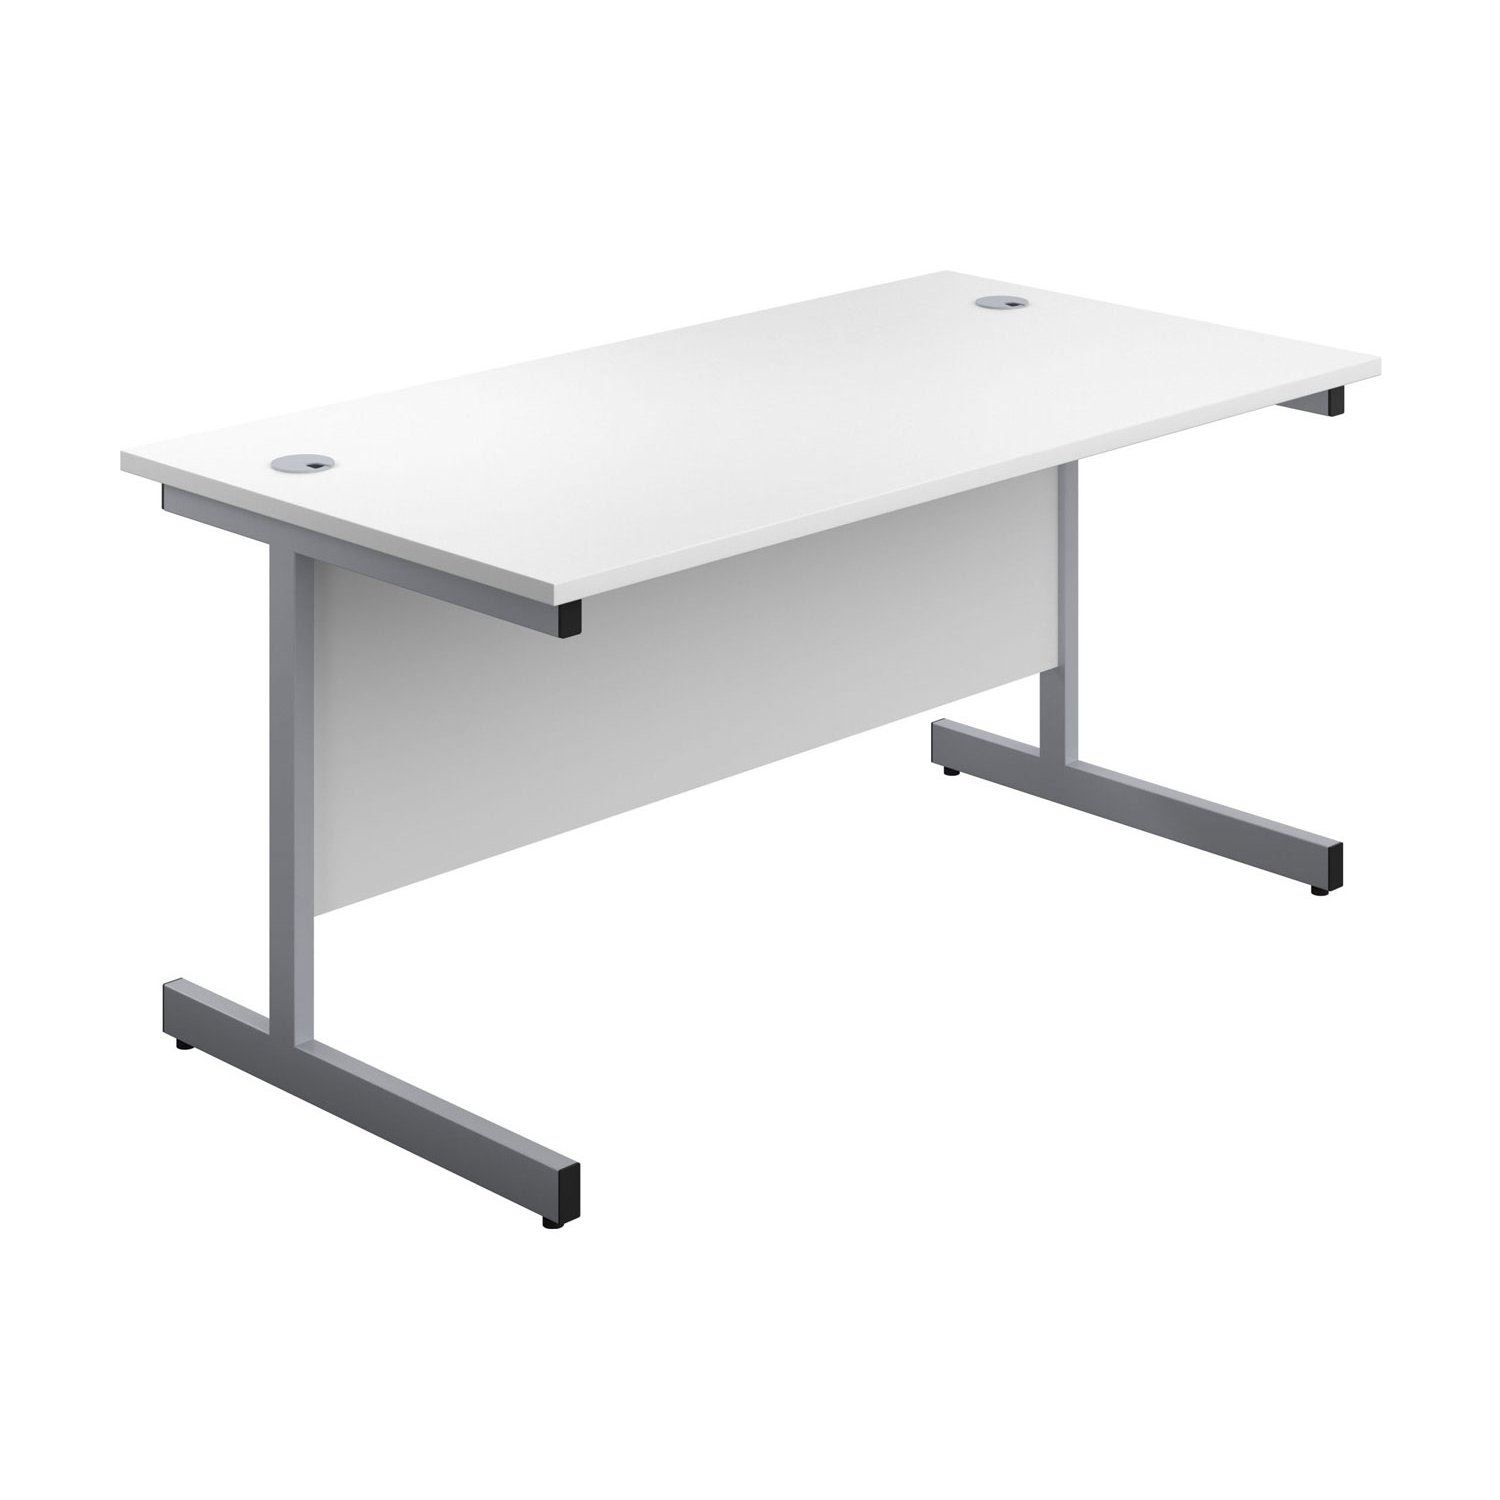 Progress I Rectangular Desk, 160wx80dx73h (cm), Silver/White